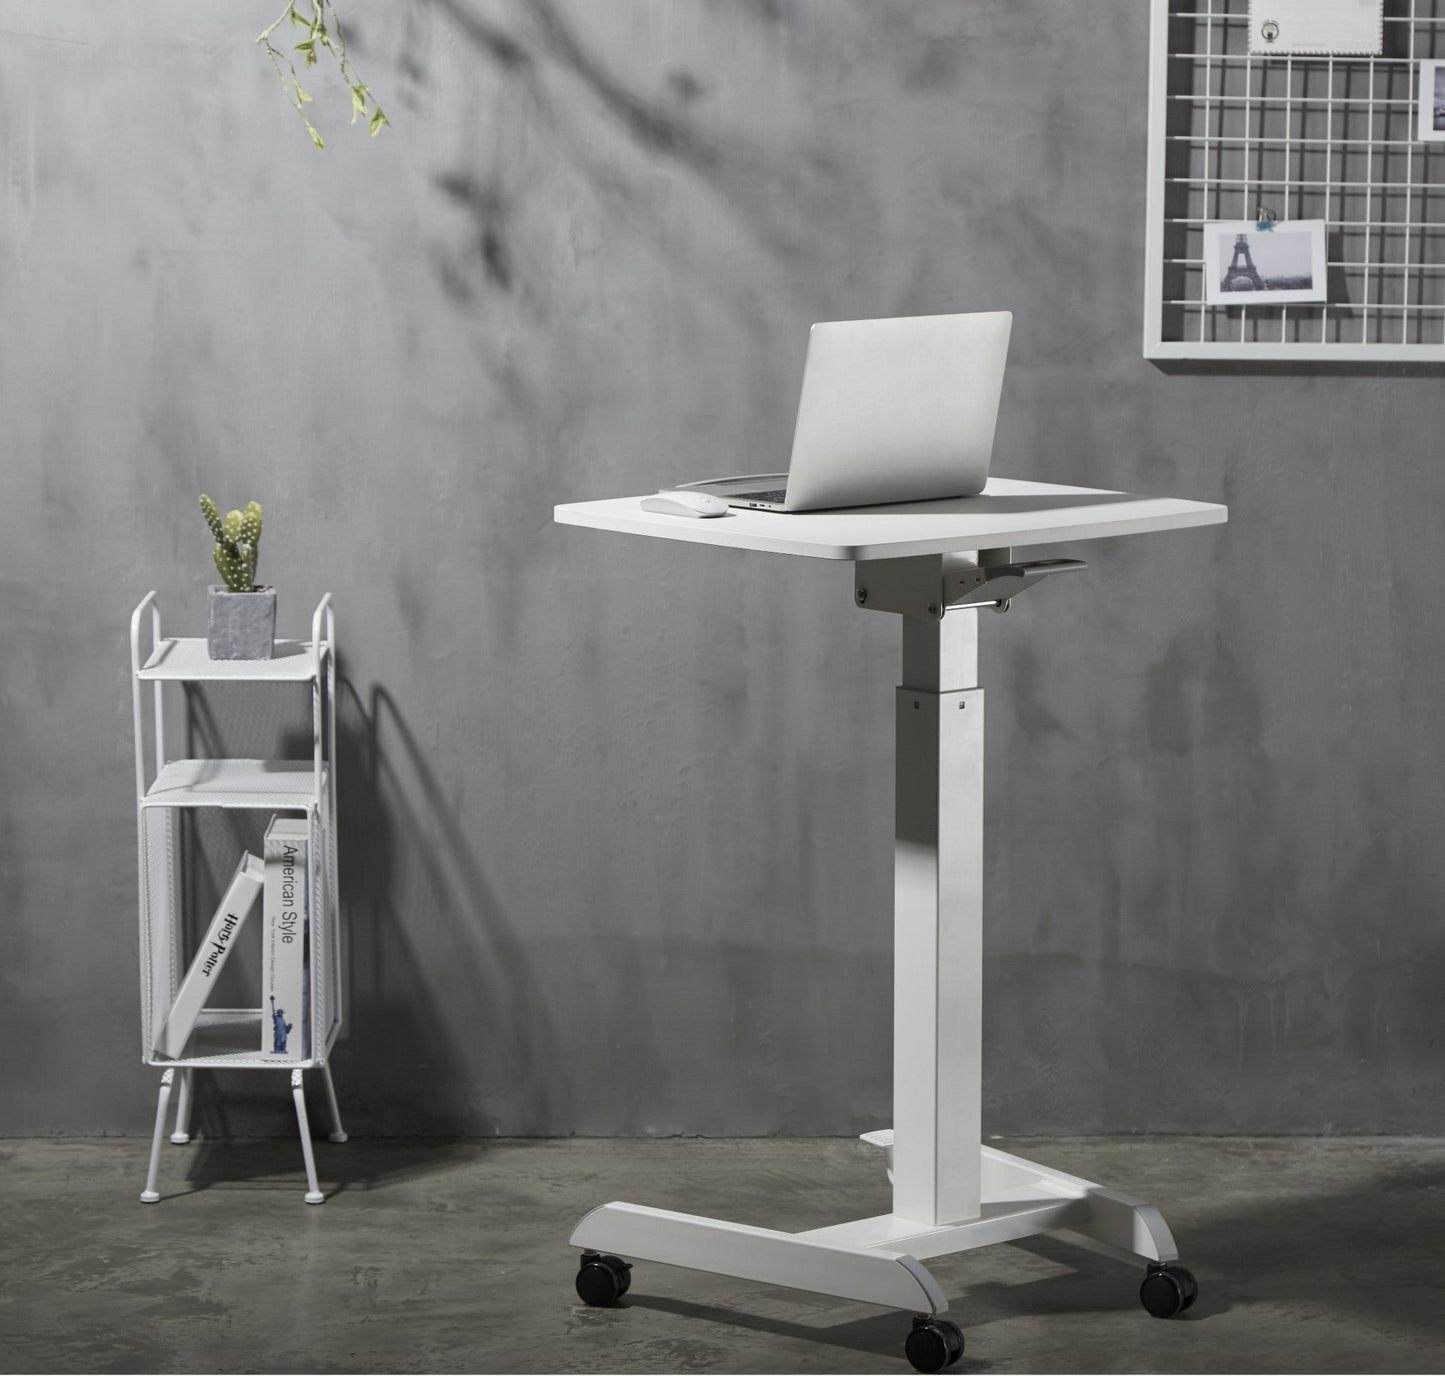 ProperAV Mobile Sit-Stand Desk Workstation - White - maplin.co.uk